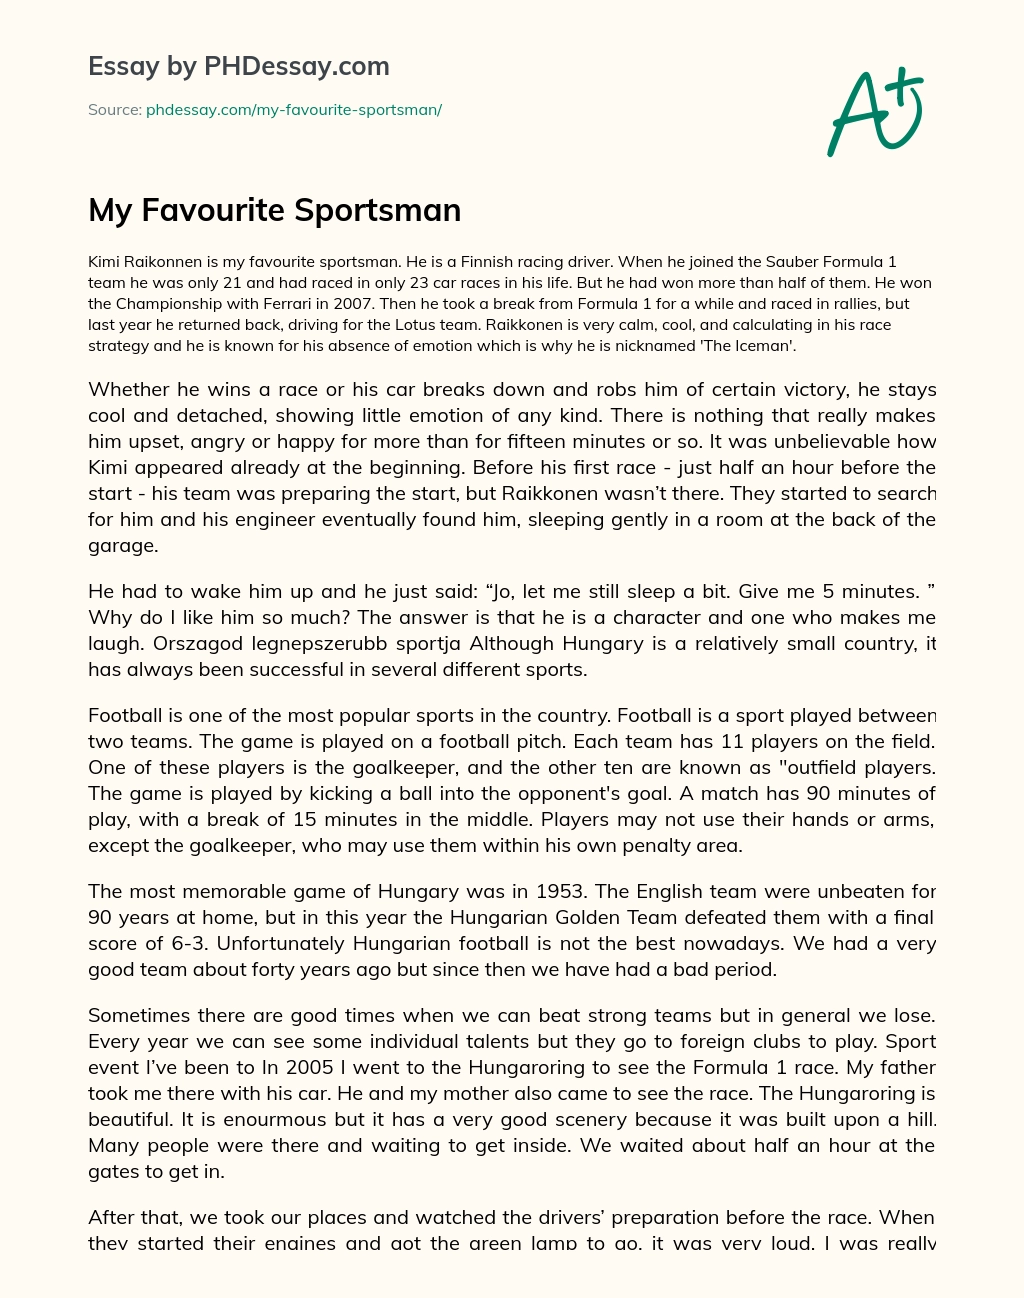 my favourite sportsman essay grade 9